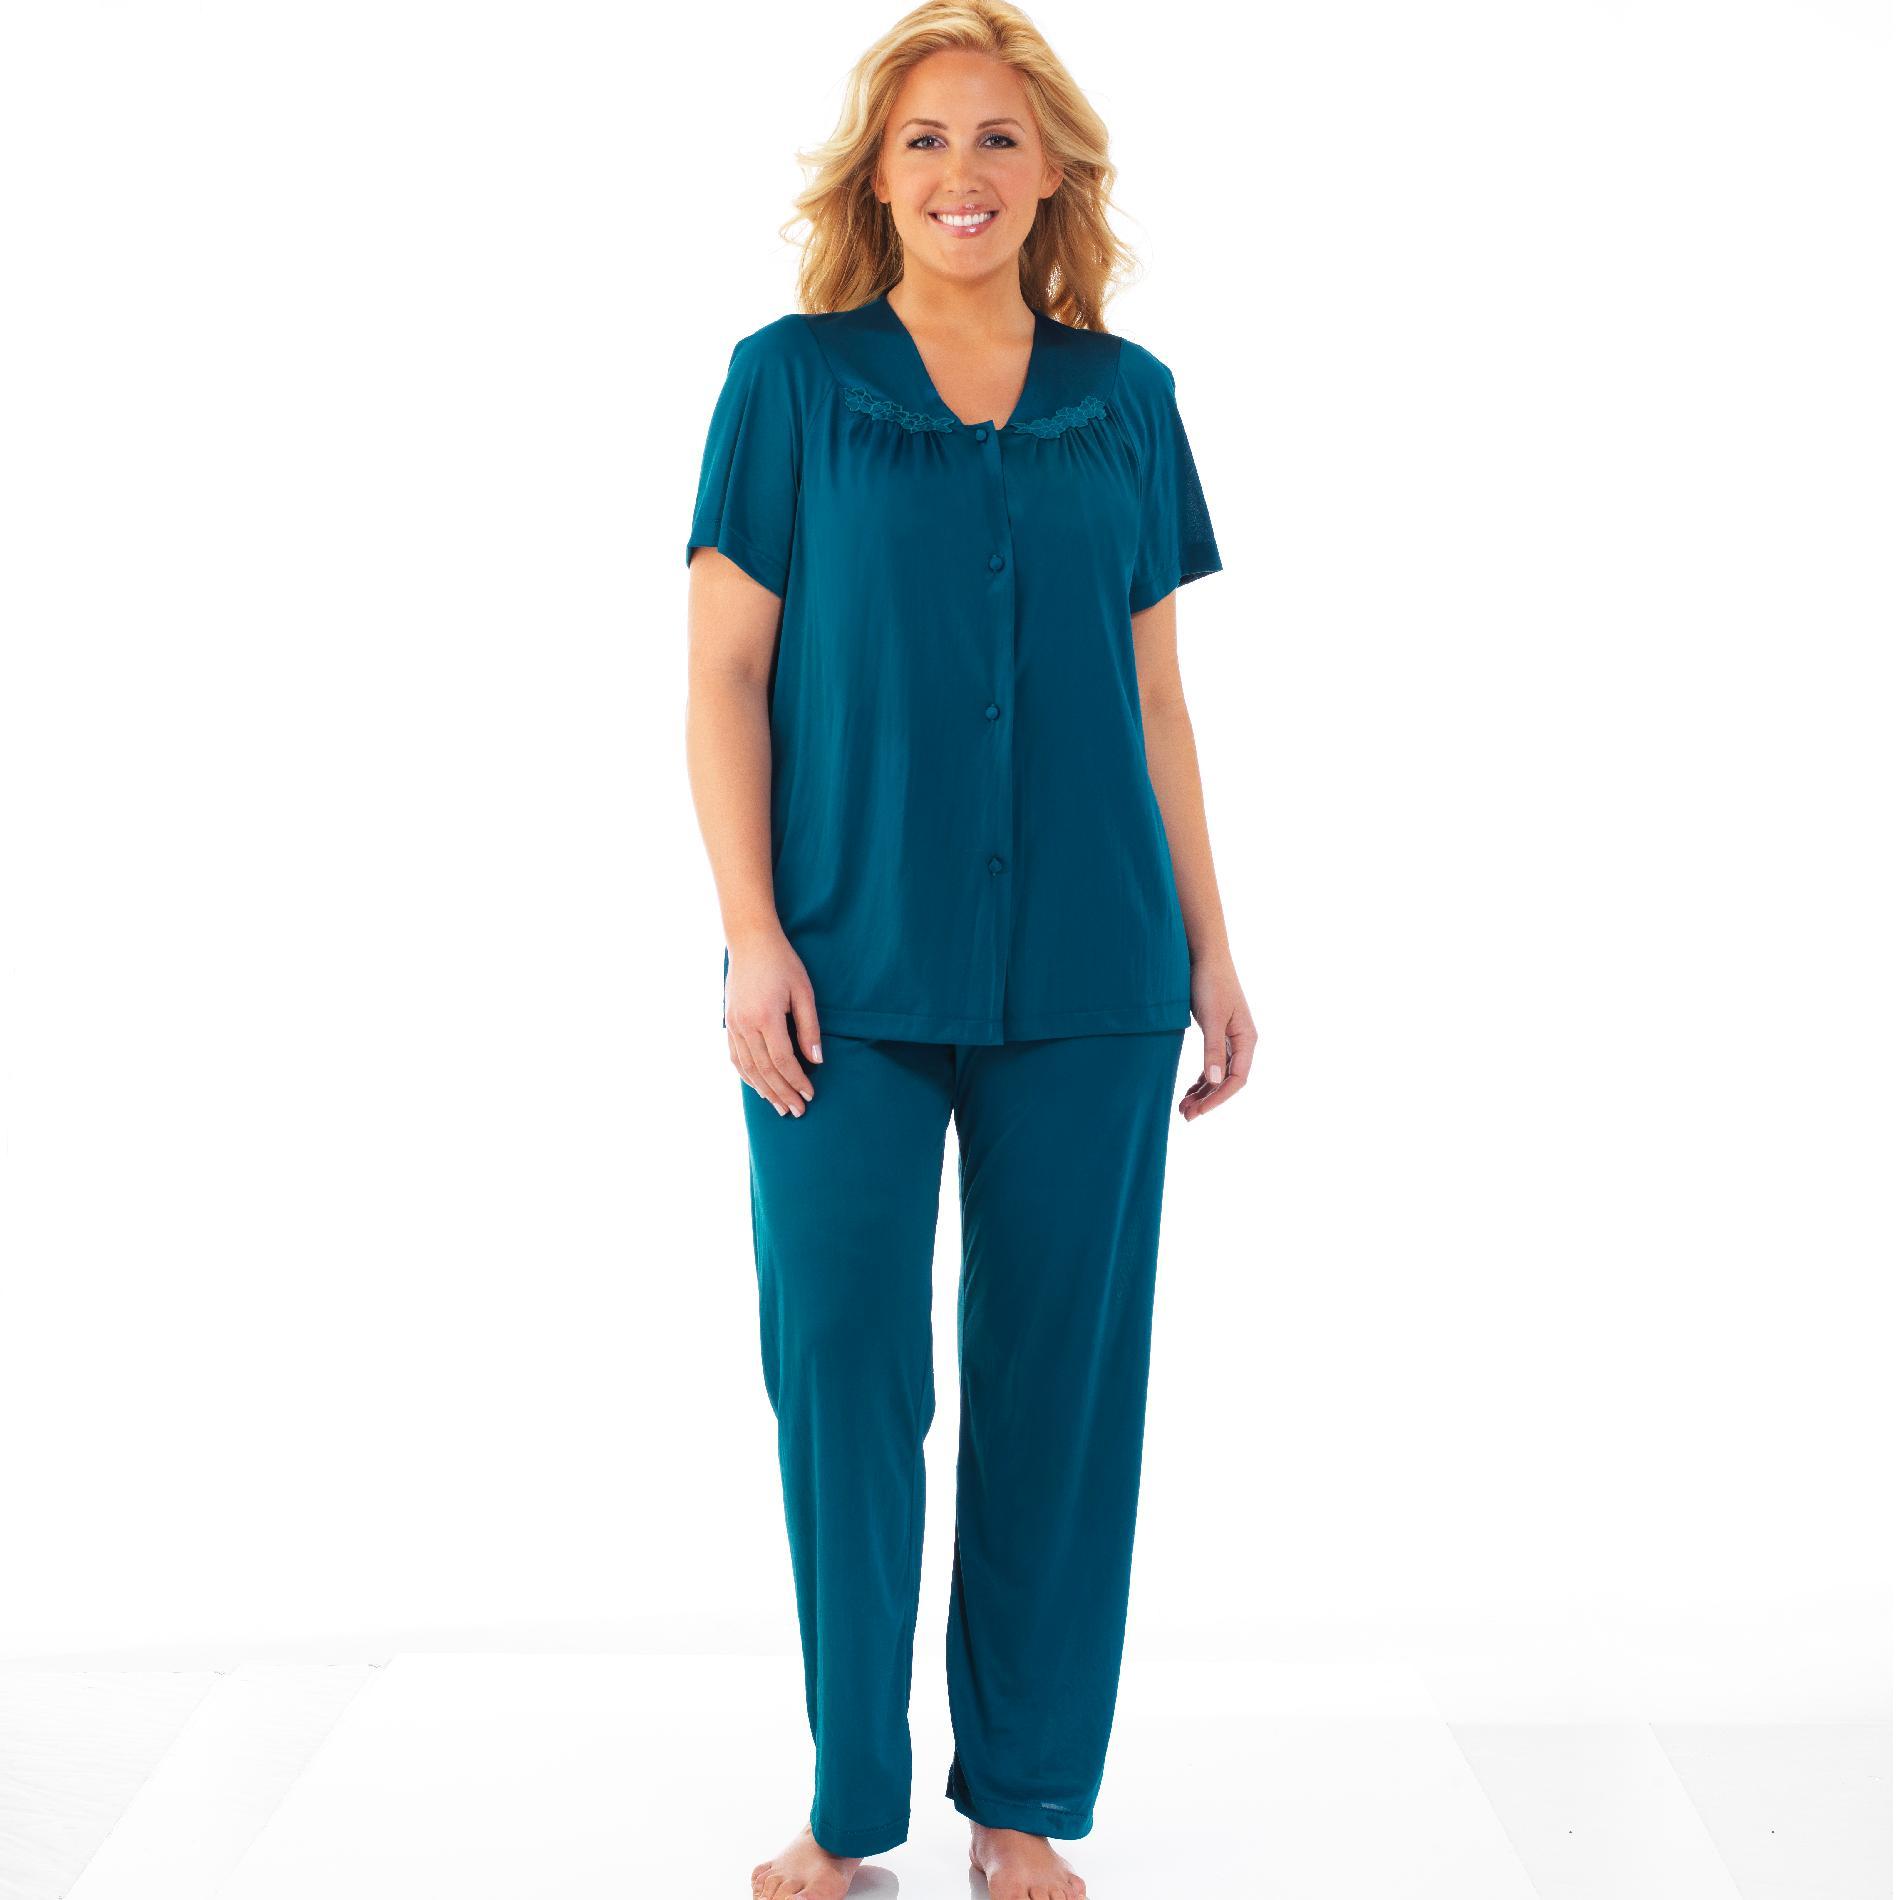 UPC 083623334240 product image for Women's Vanity Fair Colortura Short Sleeve Pajama Set | upcitemdb.com